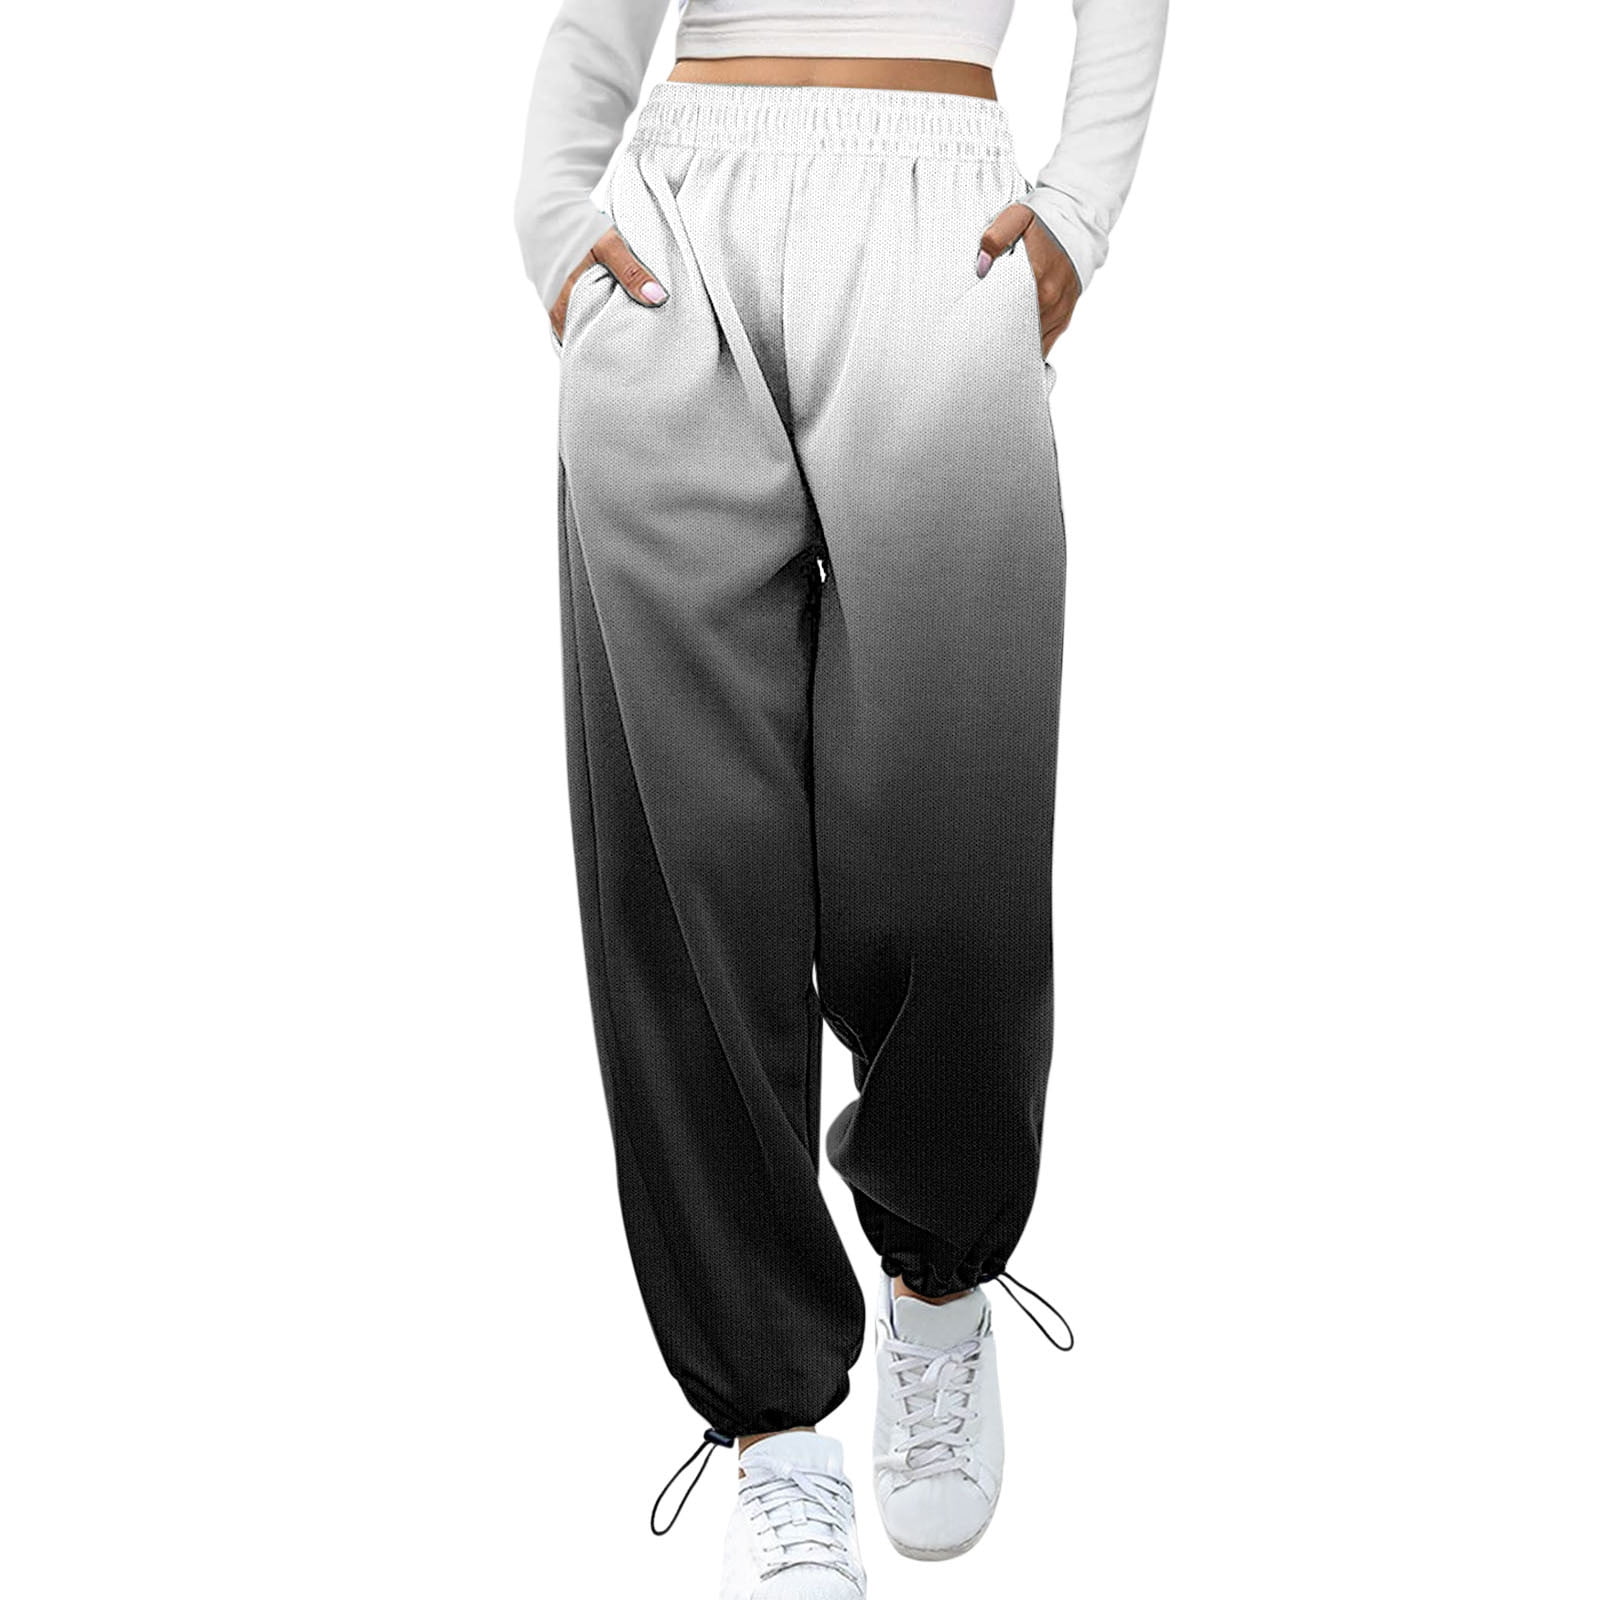 TOWED22 Pants for Women,Women's Sweatpants Pockets High Waist Gym